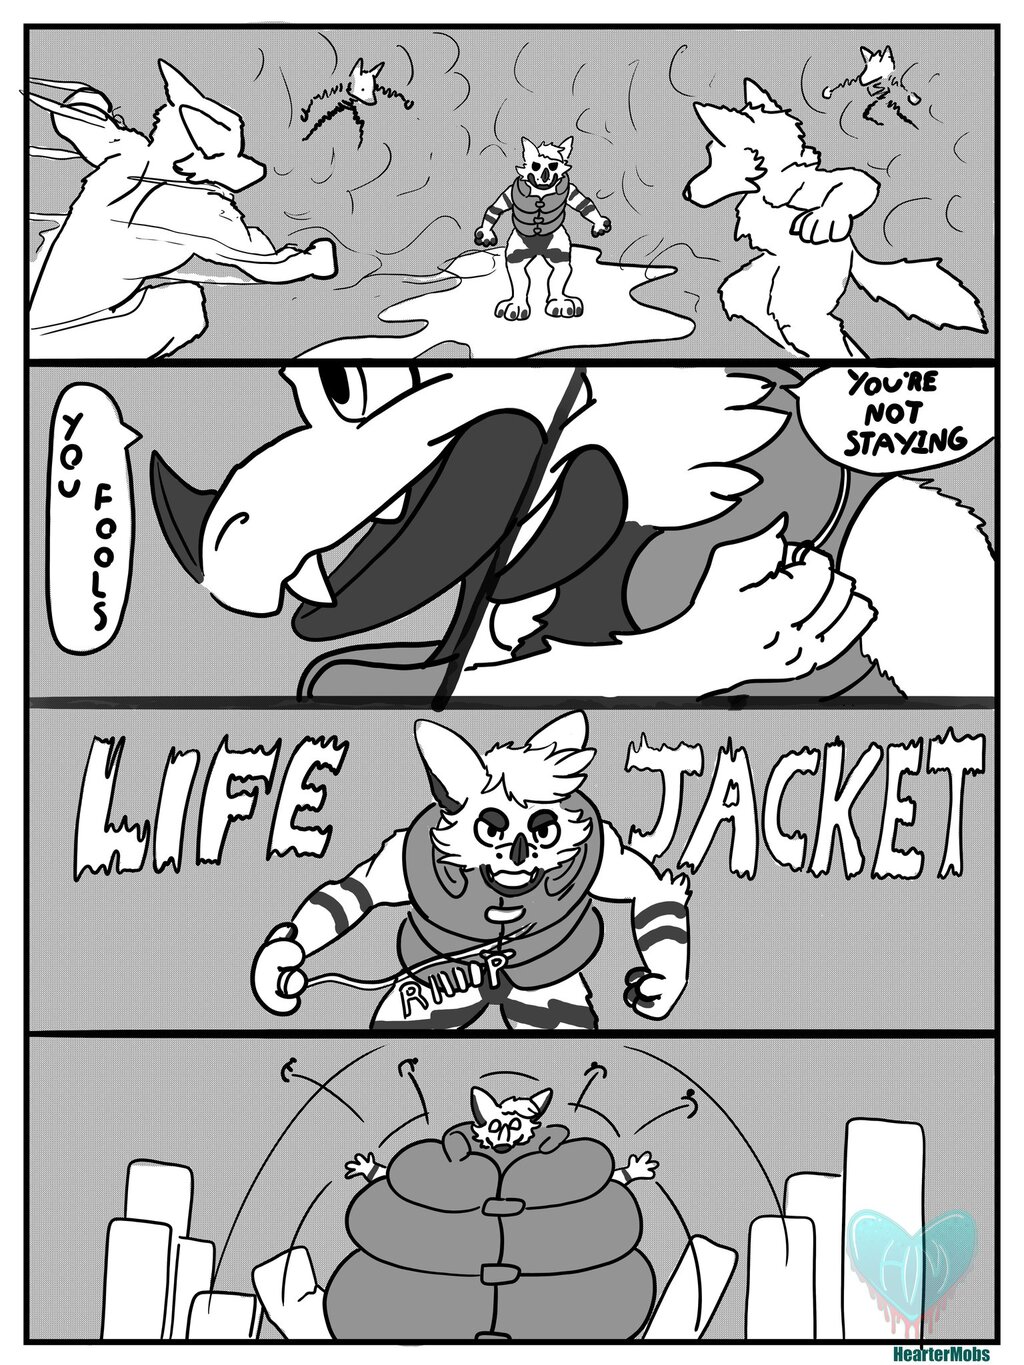 Life Jacket Battle